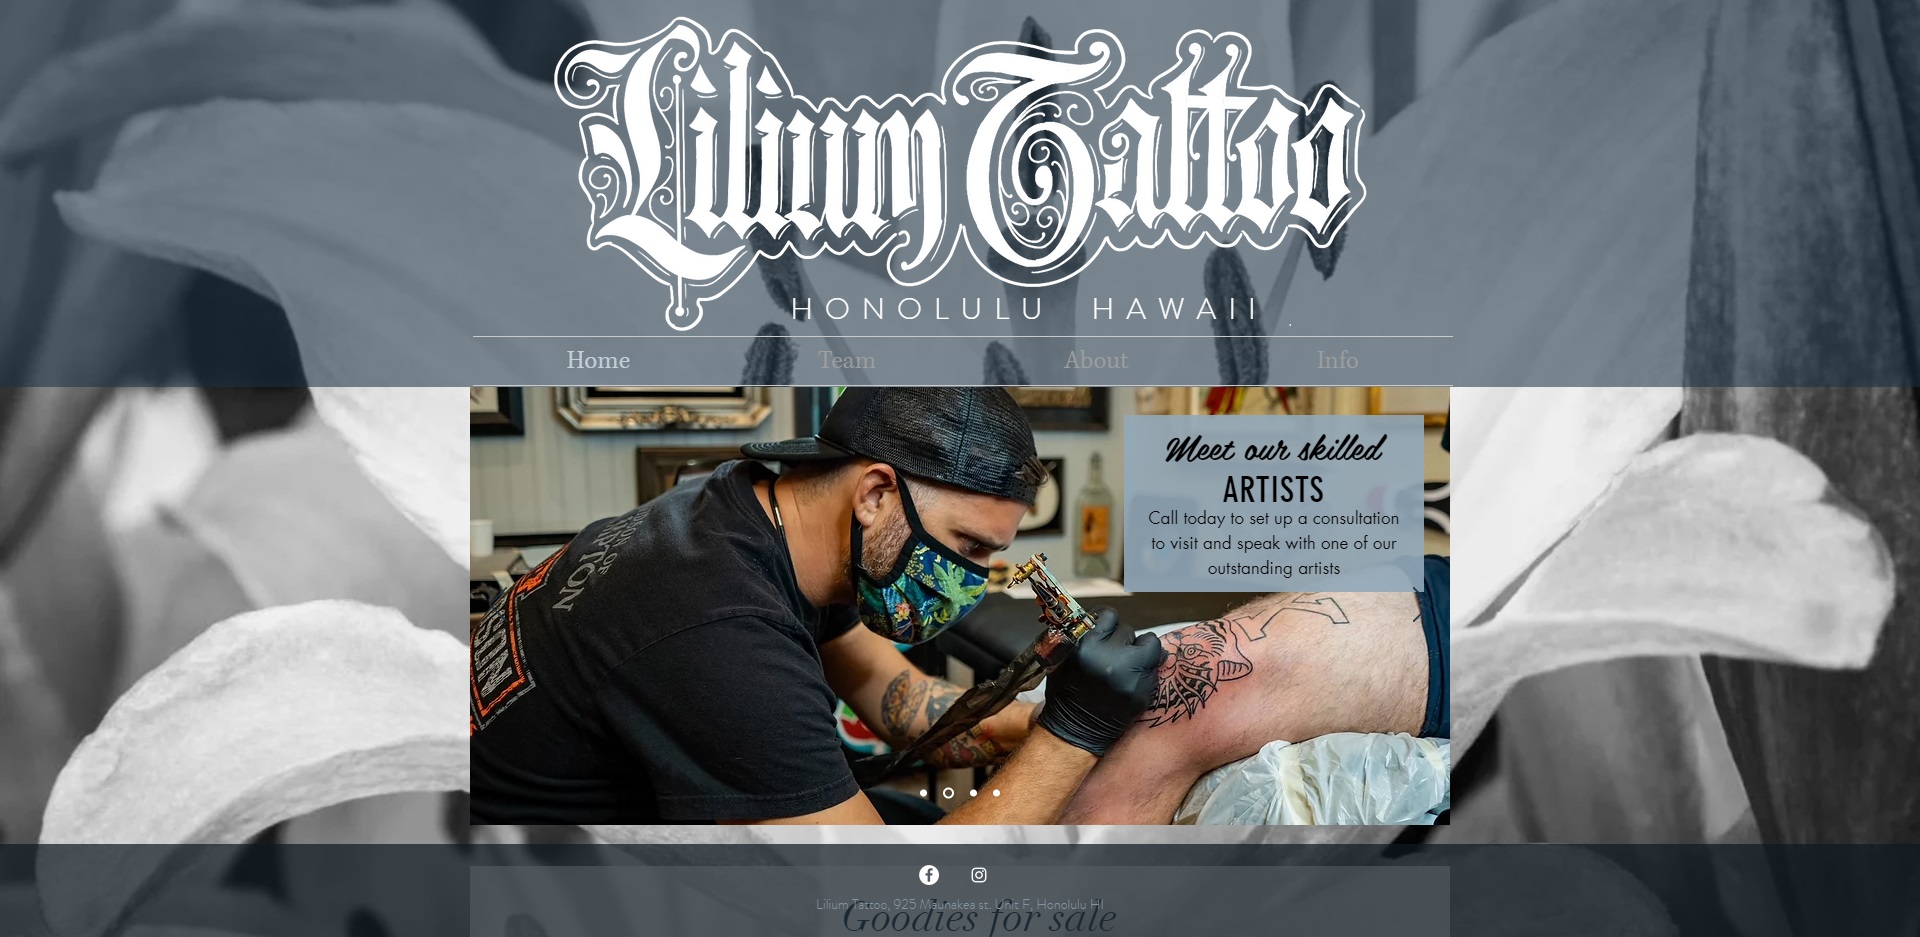 5 Best Tattoo Artists in Honolulu, HI